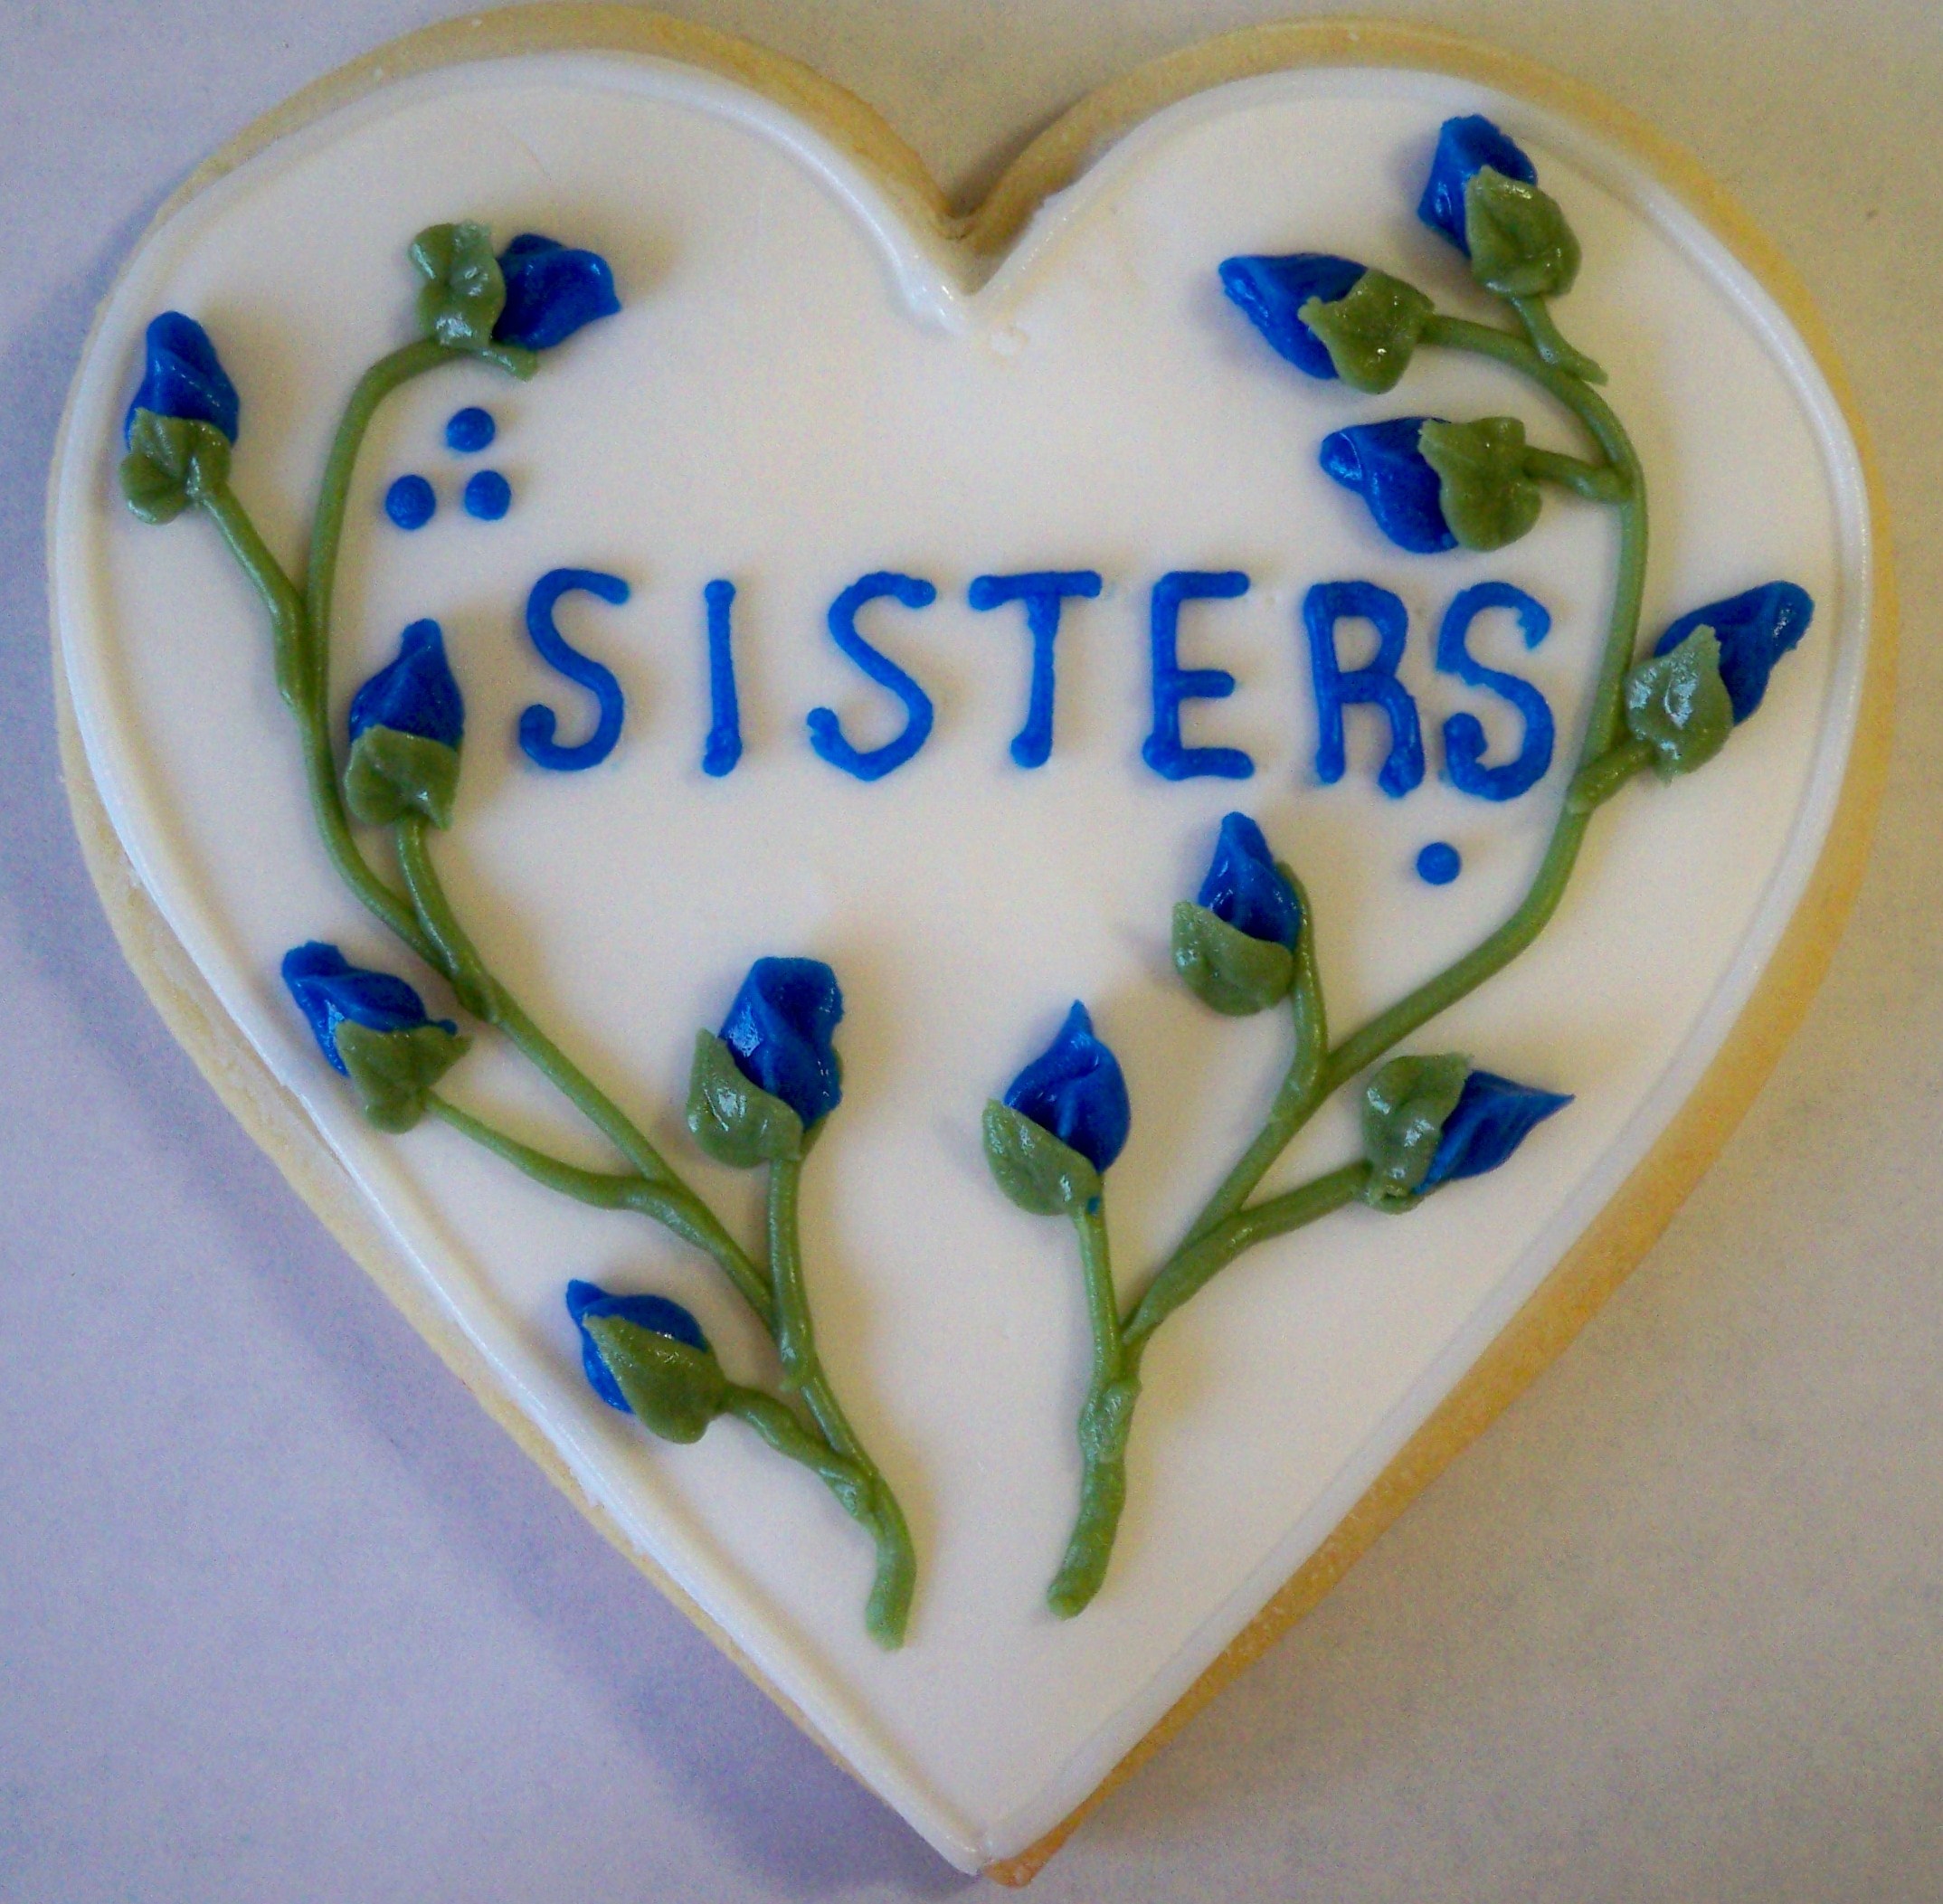 (13)Sisters Heart
